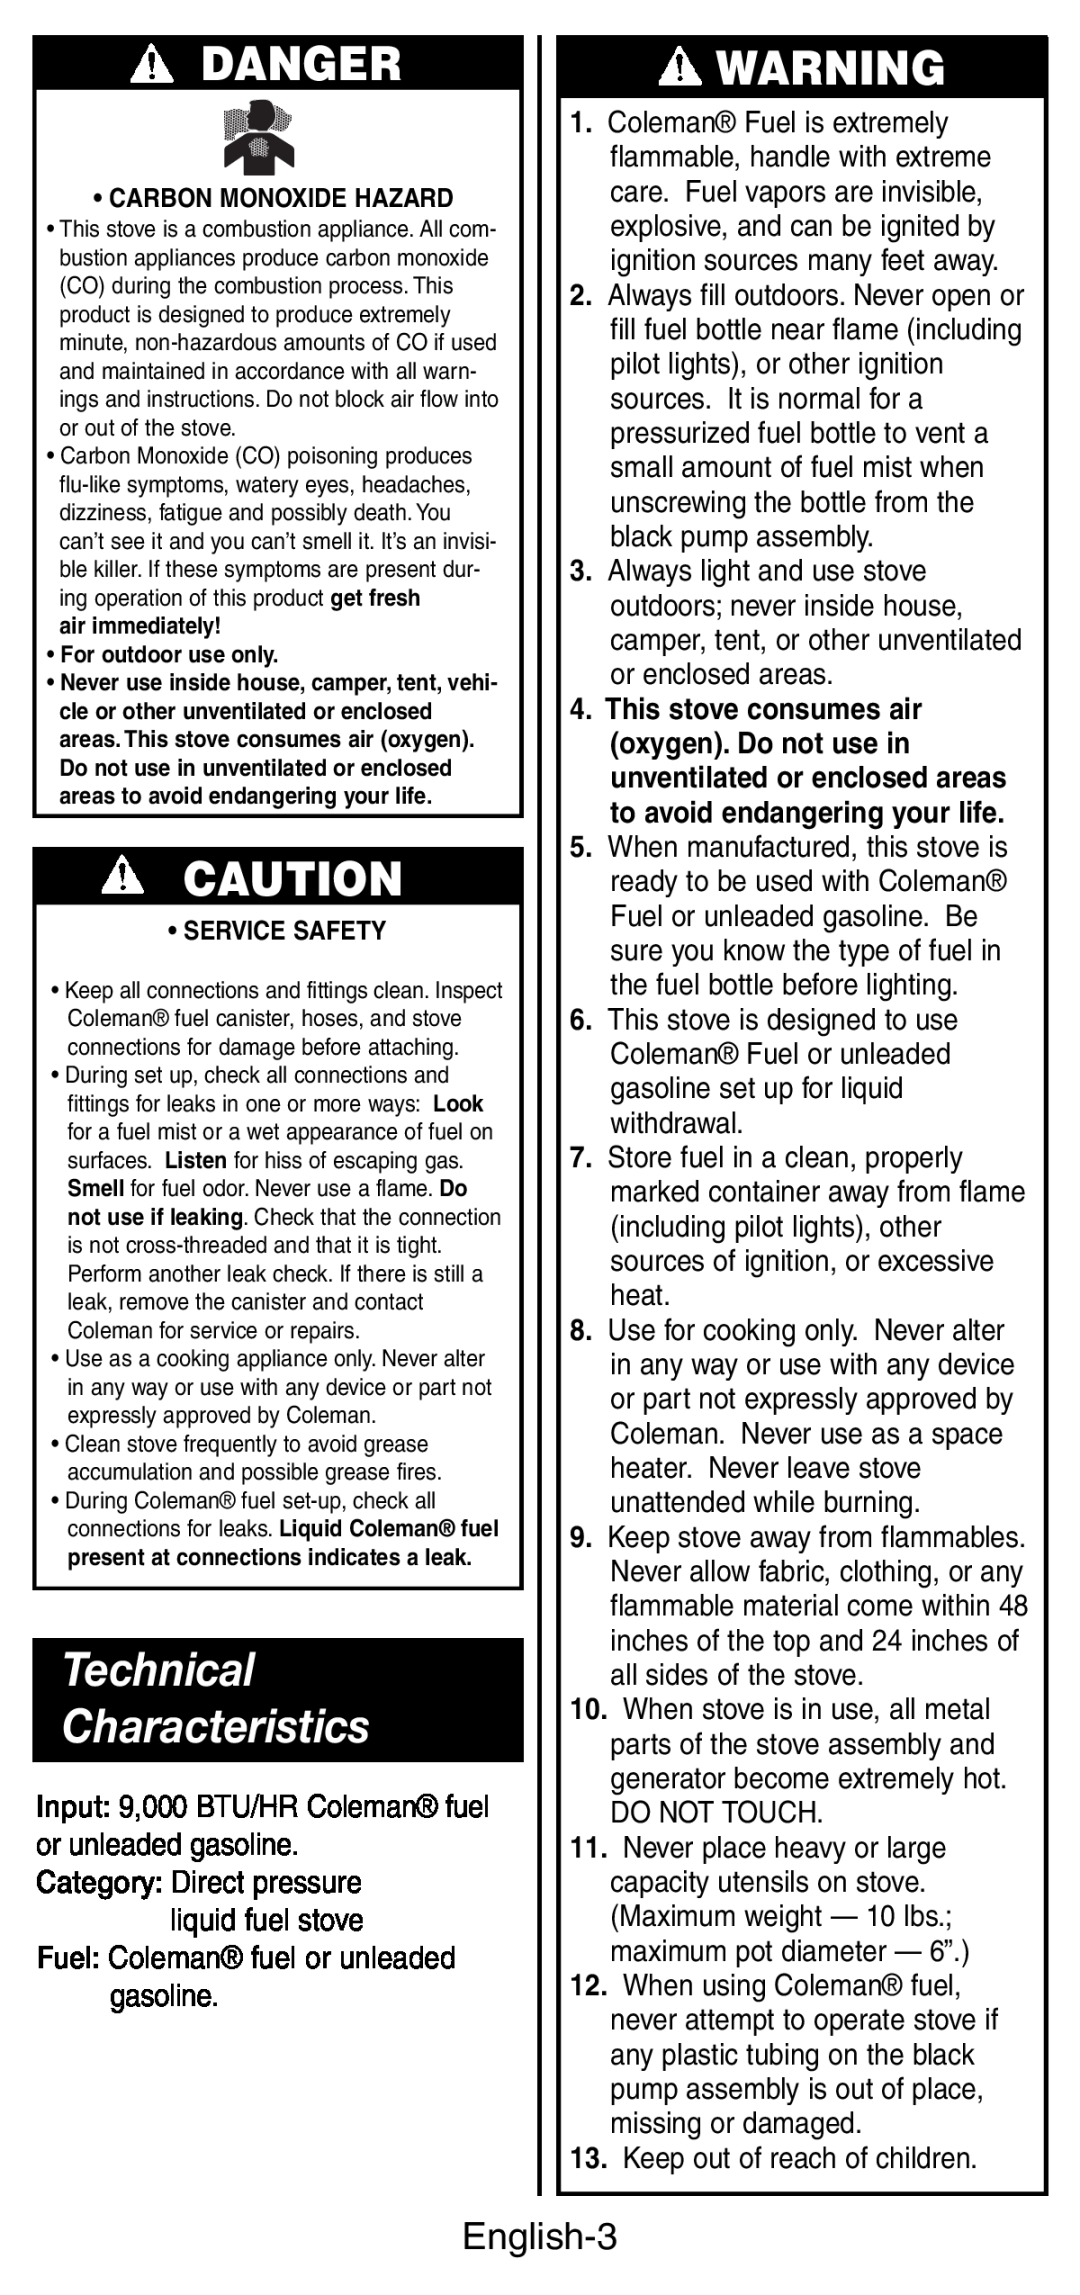 Coleman 9760 manual English-3, Danger, Technical Characteristics, Carbon Monoxide Hazard, Service Safety 